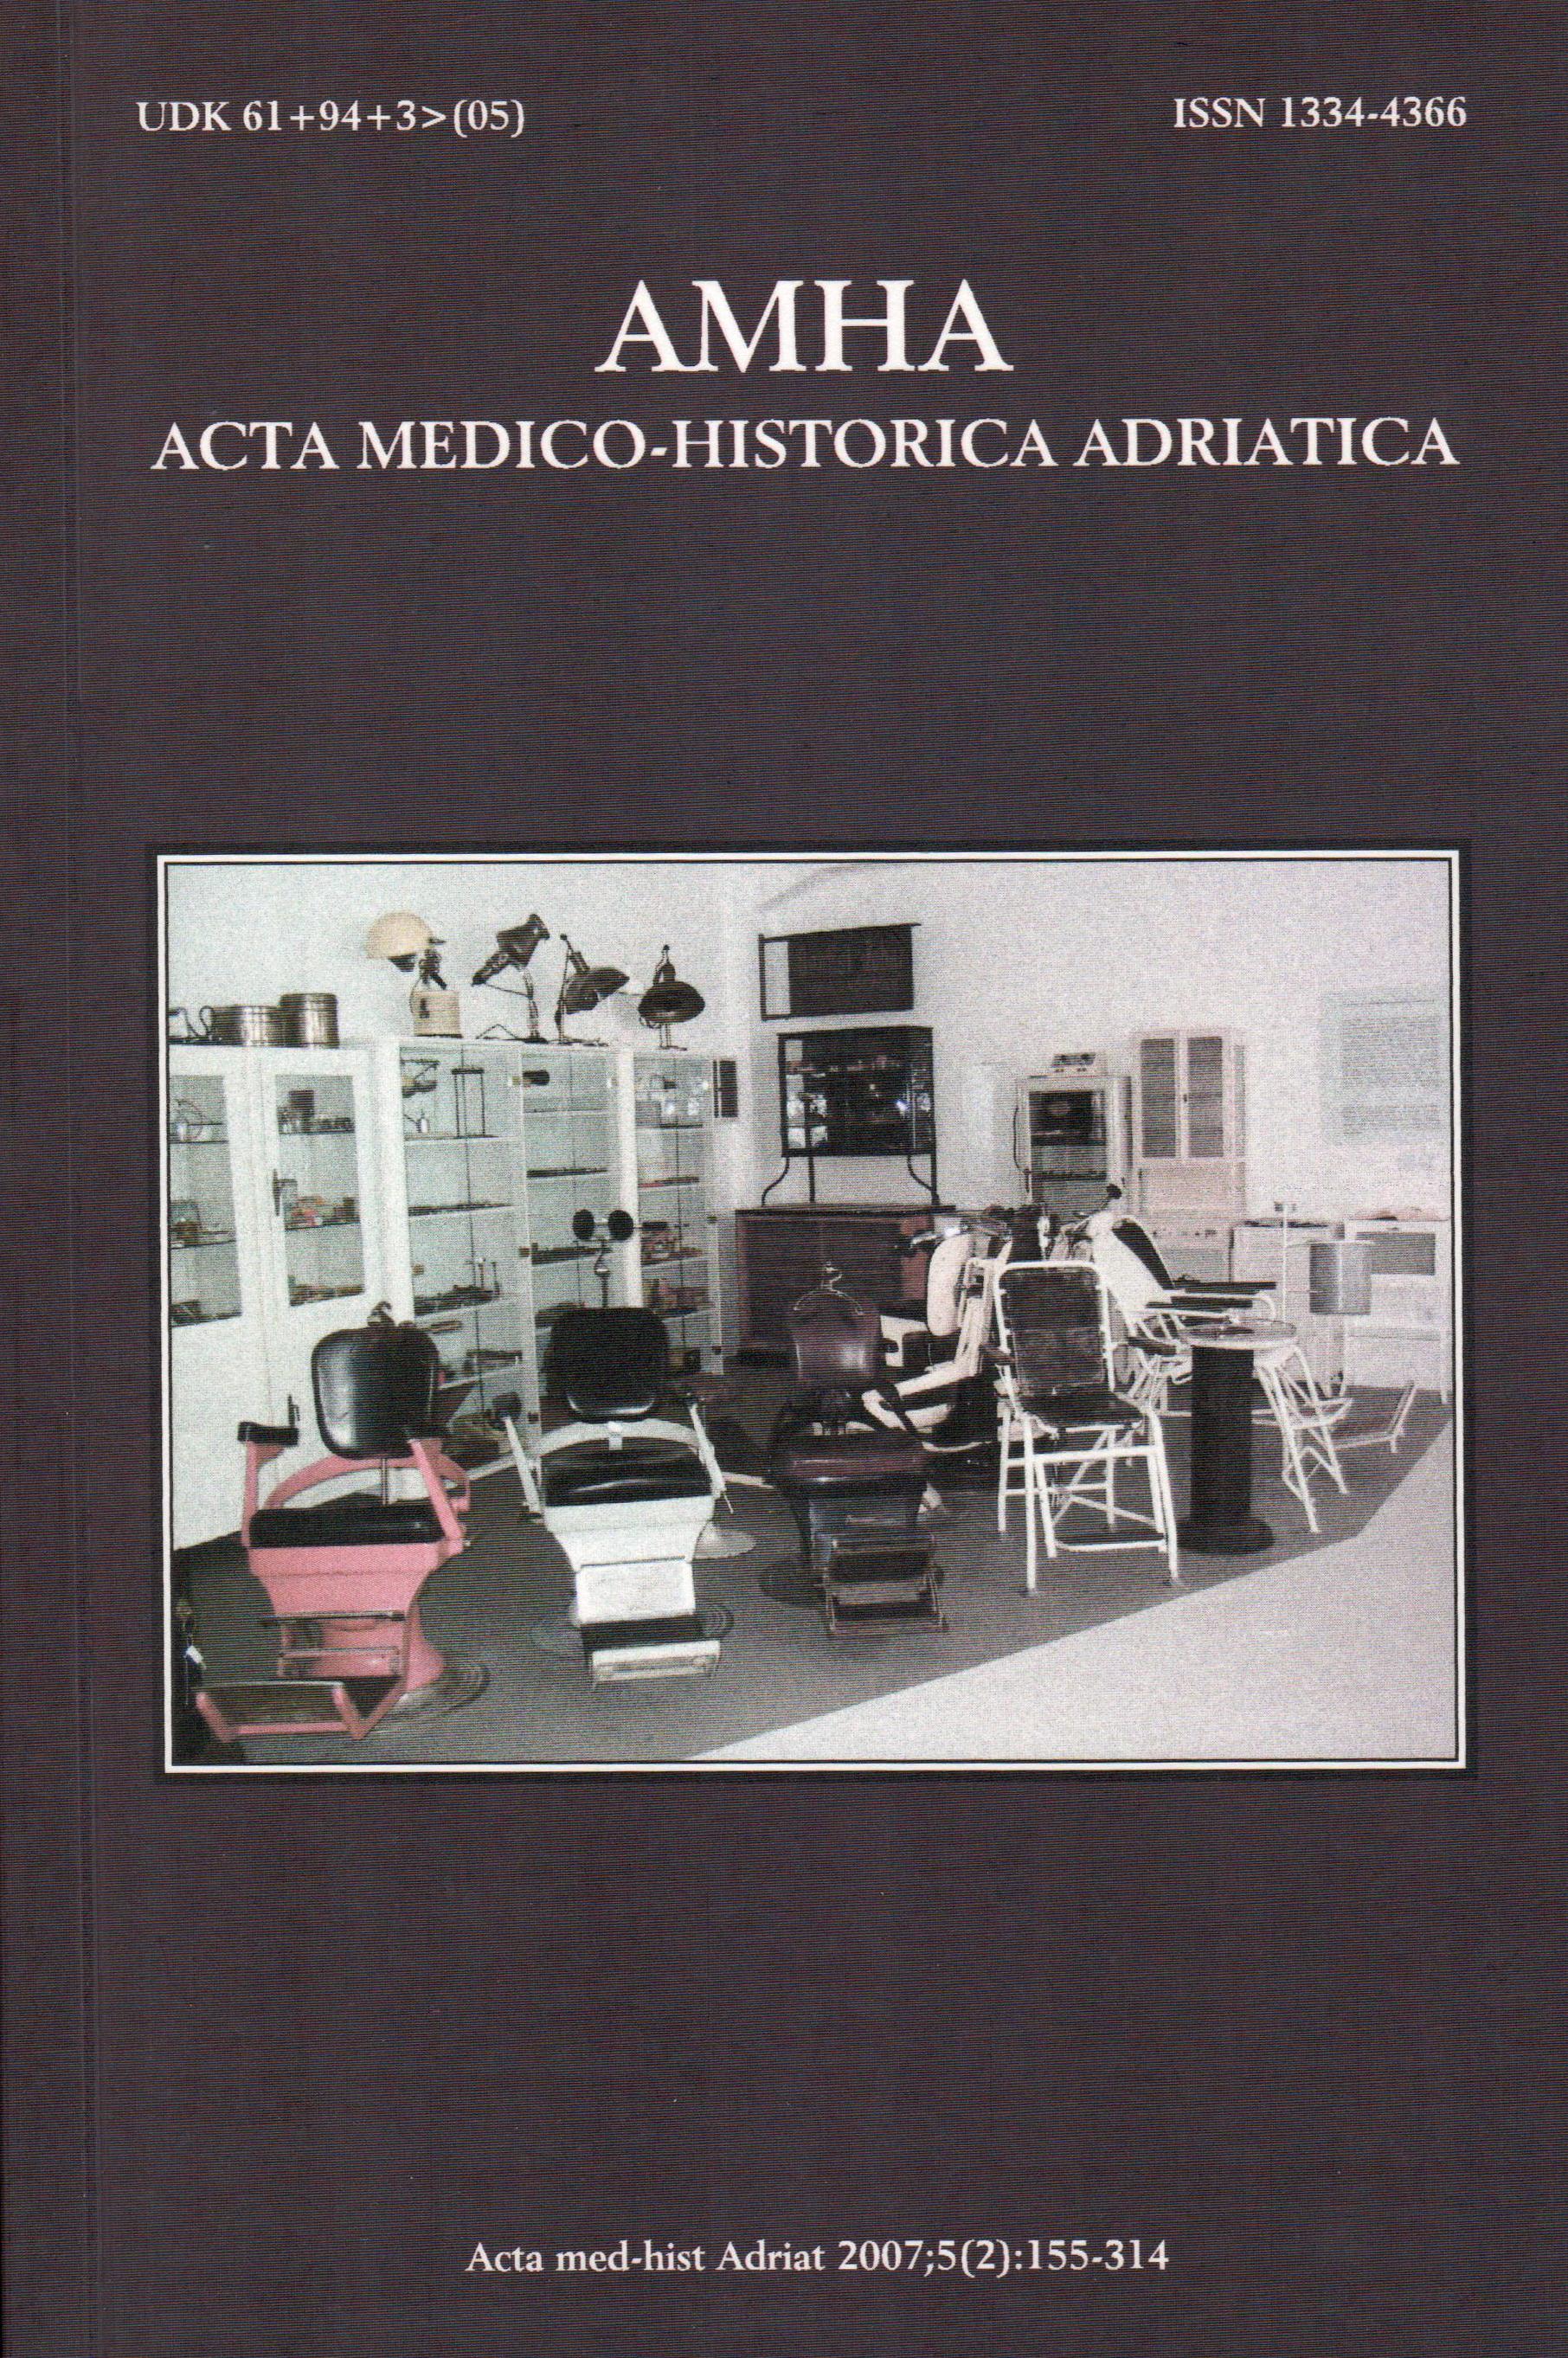 					View Vol. 5 No. 2 (2007): Vol 5 No 2 (2007): AMHA – Acta medico-historica Adriatica
				